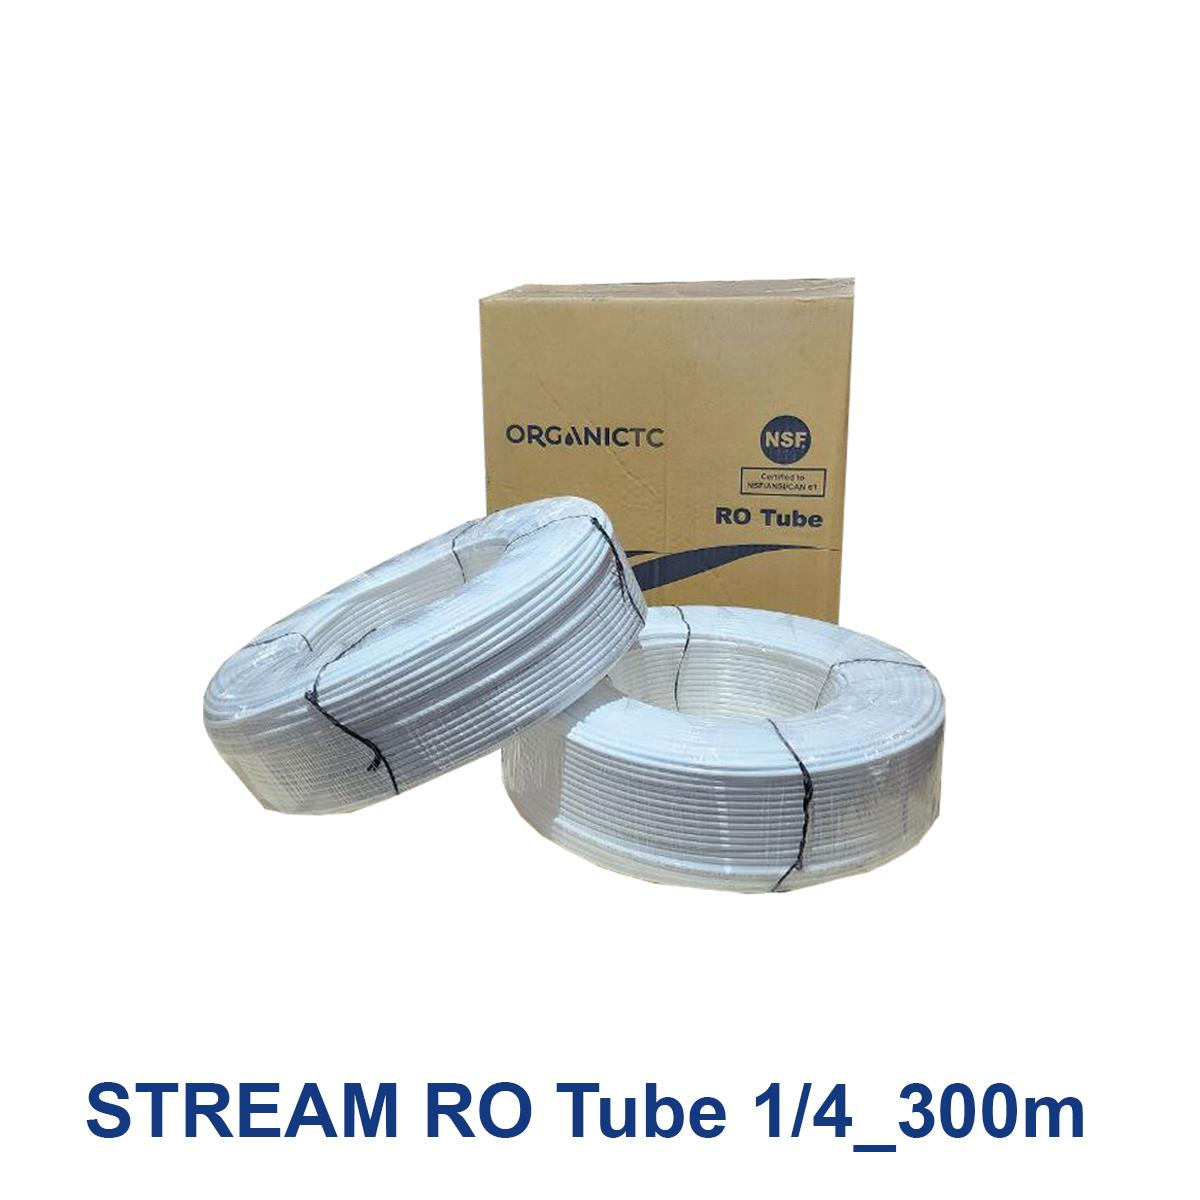 STREAM-RO-Tube-1-4_300m